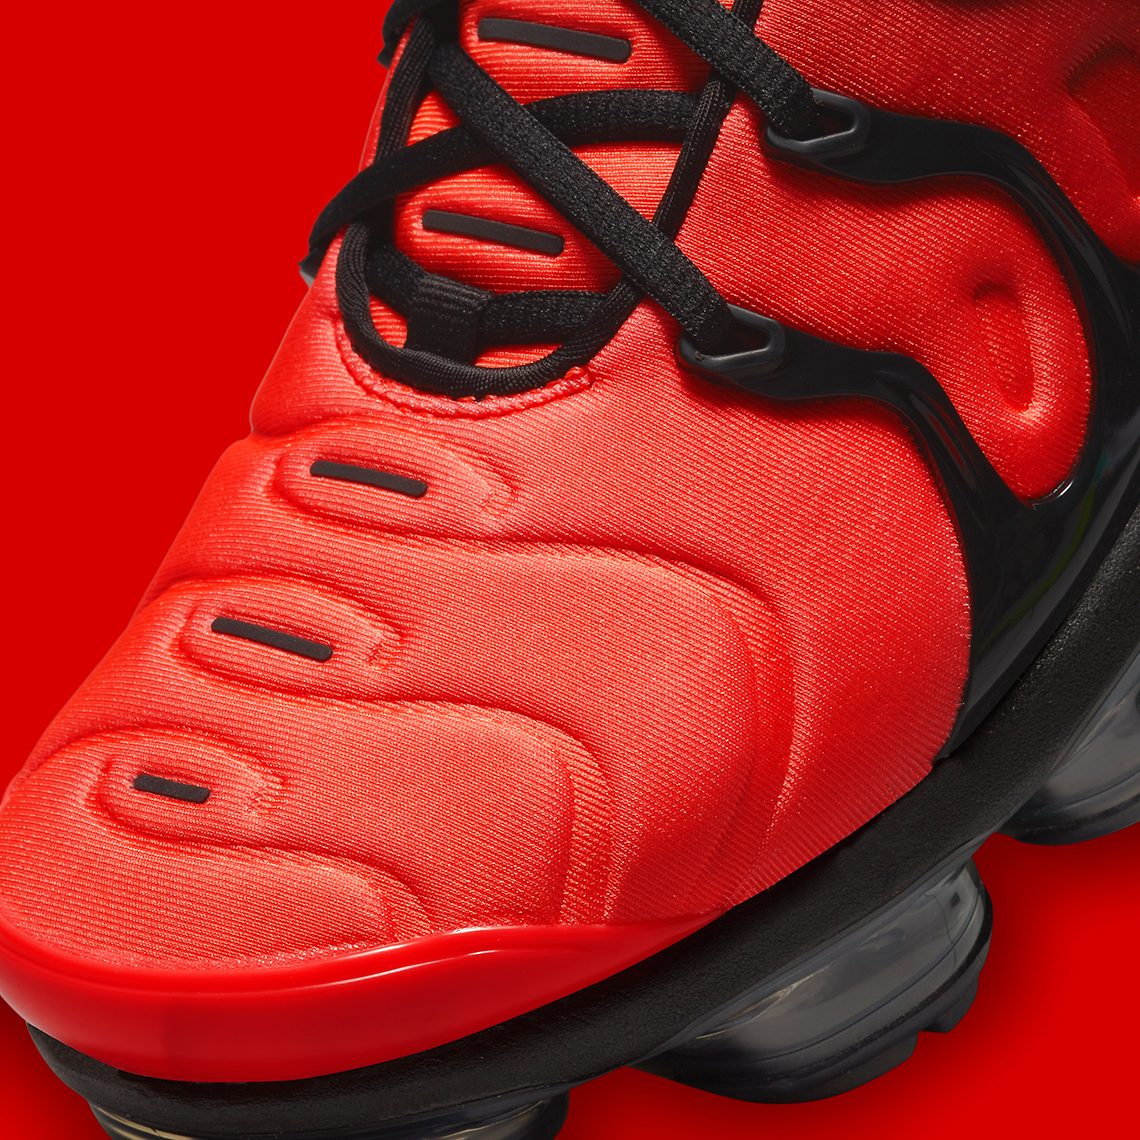 Nike Vapormax Plus Red Black Dz4857 001 2